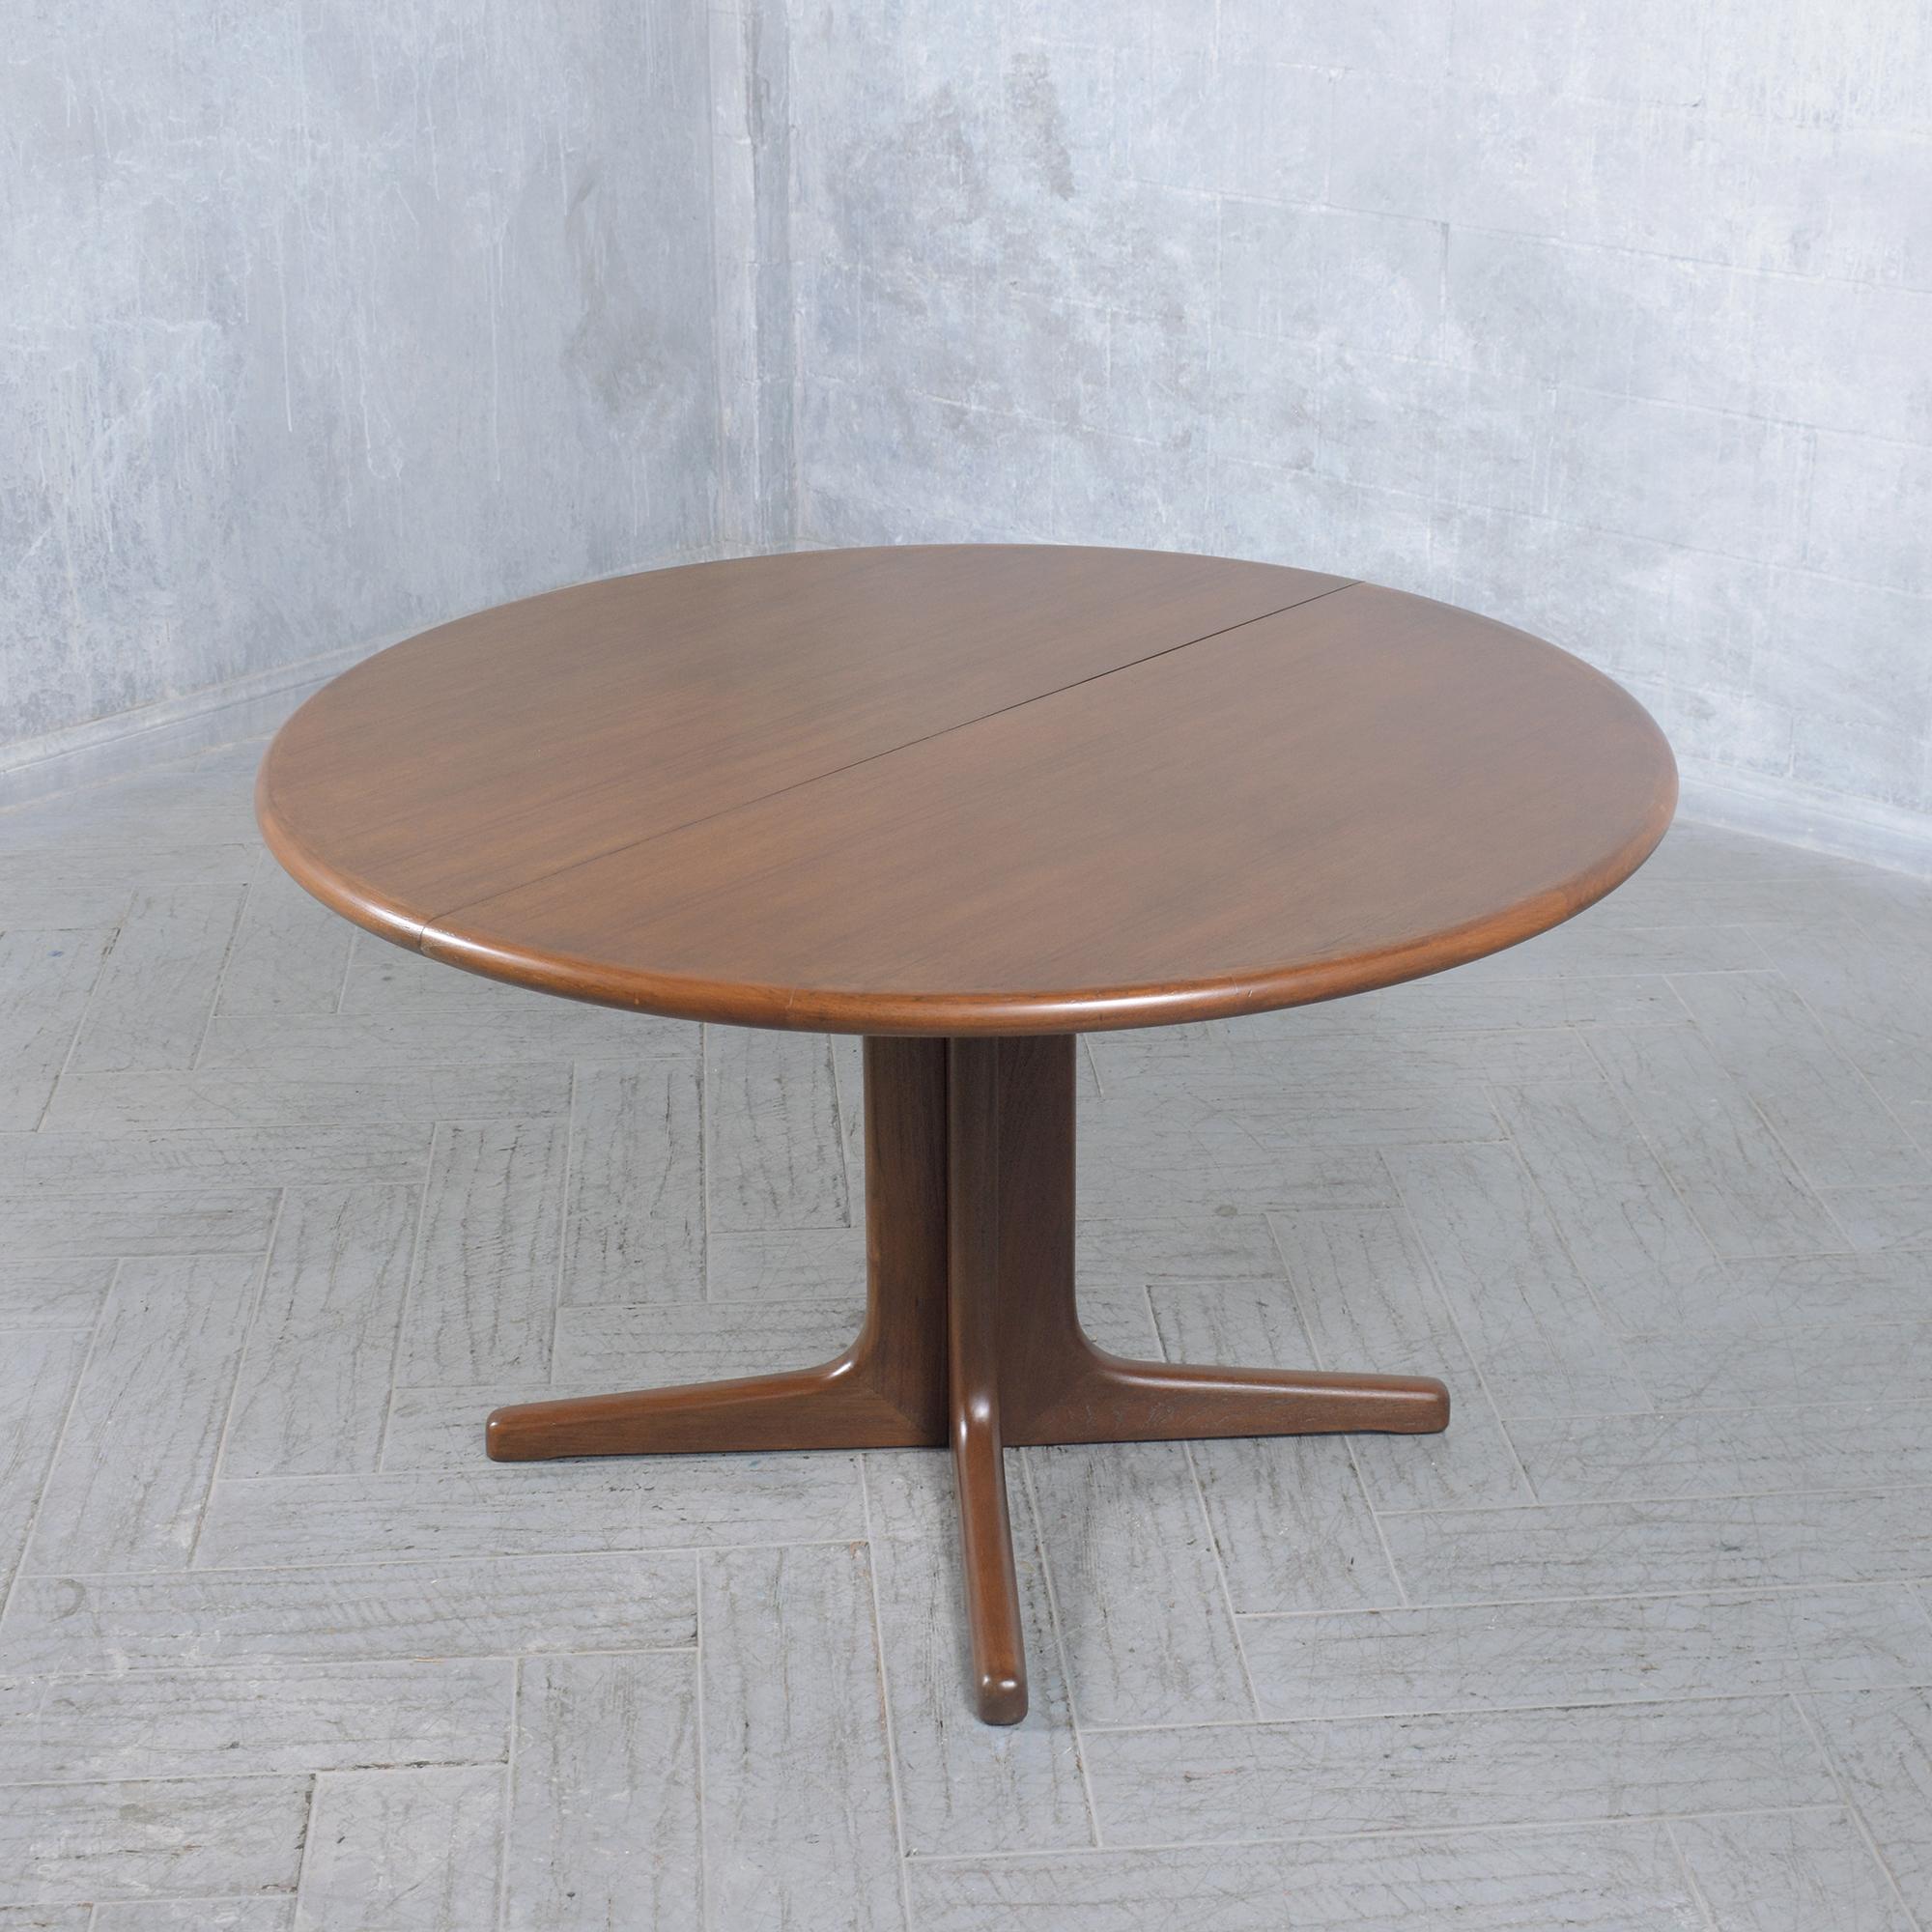 Lacquer Vintage Danish Extendable Teak Dining Table with Pedestal Legs